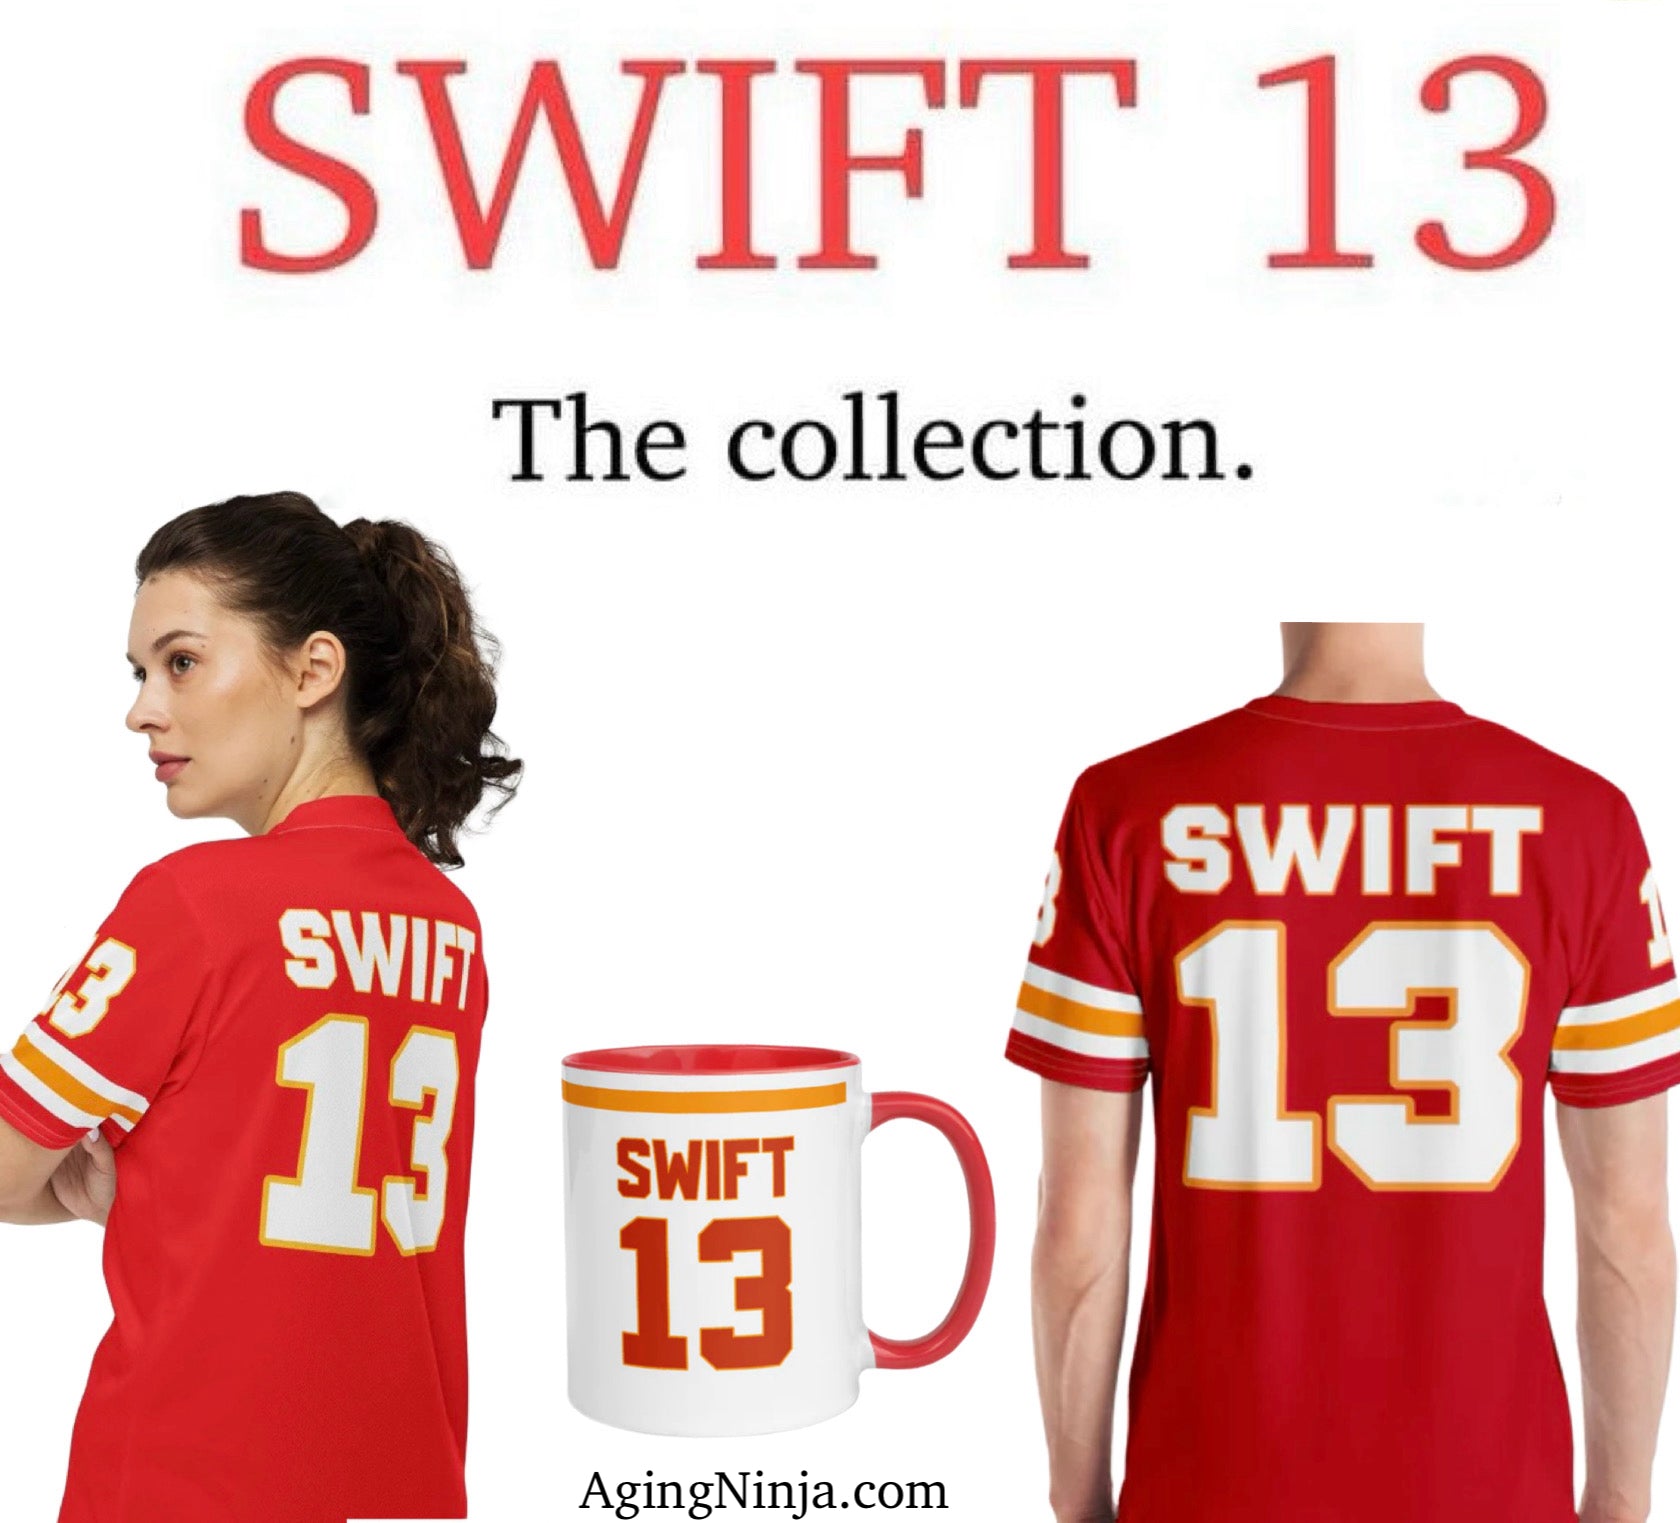 Swift 13 is a great gift for the Taylor Swift fan